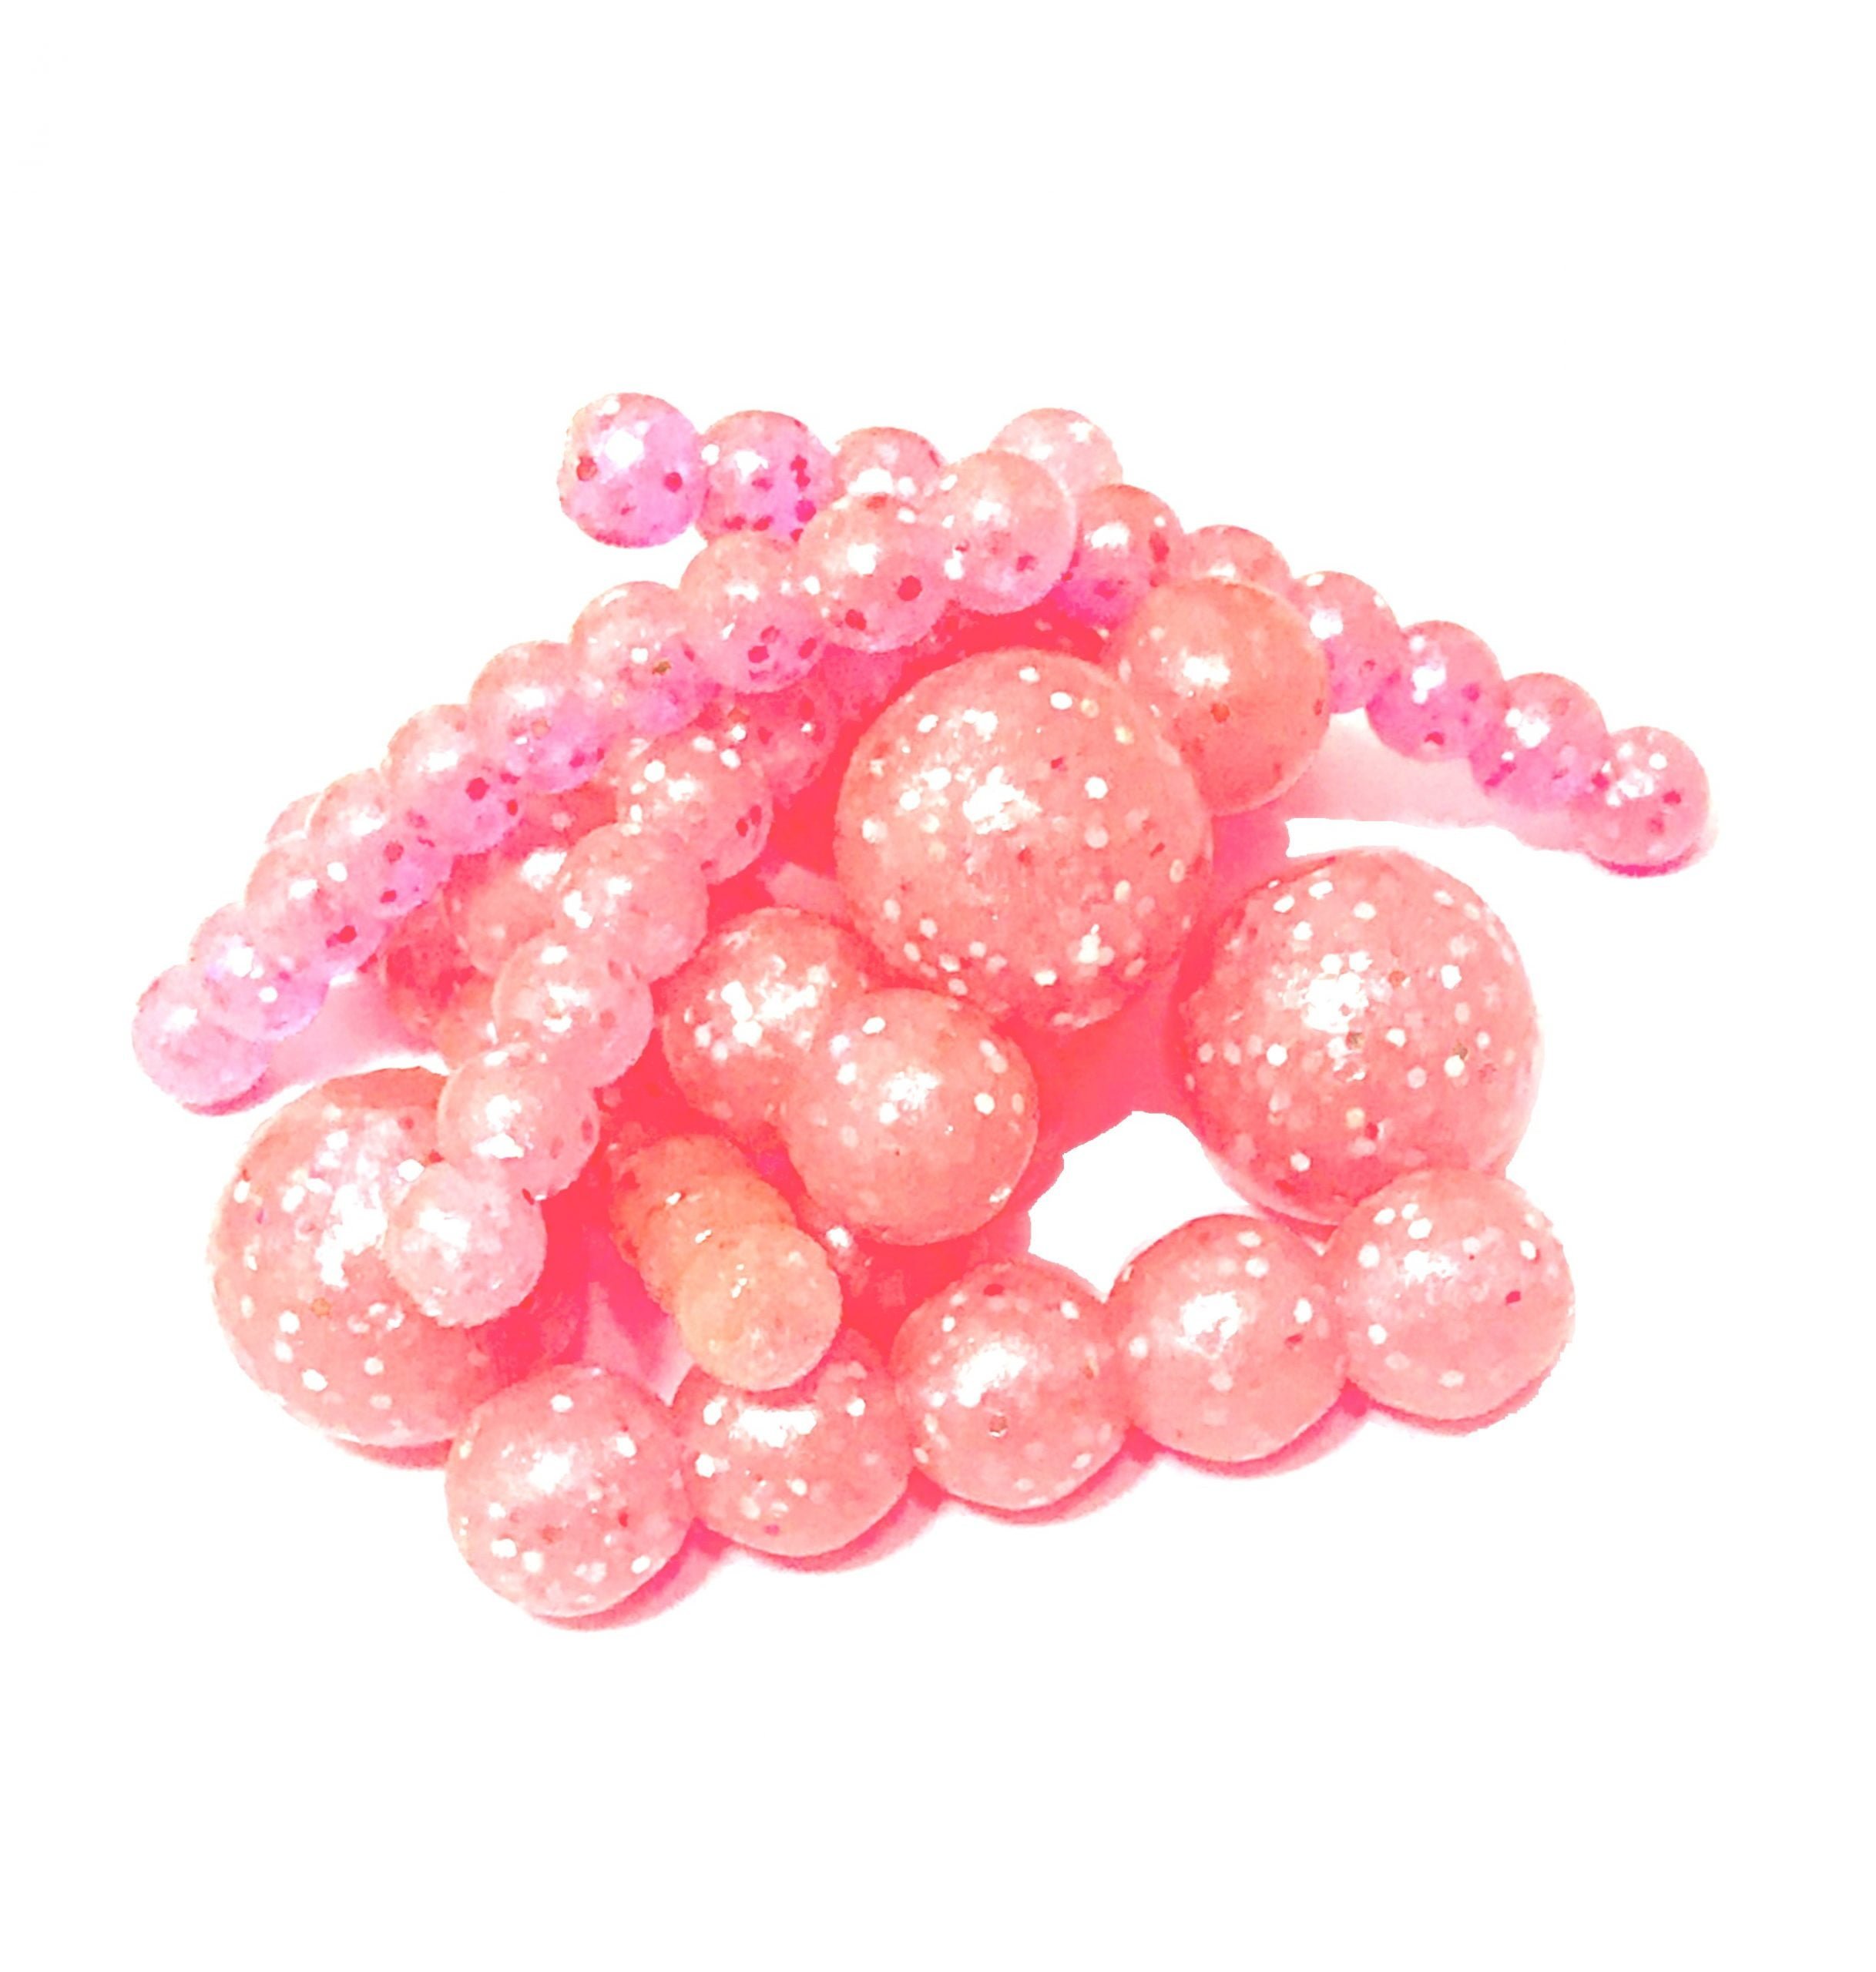 https://horkerbaits.com/wp-content/uploads/2020/04/Horker-Pink-Sparkle-Monster-Chomps-Soft-Beads--scaled.jpg